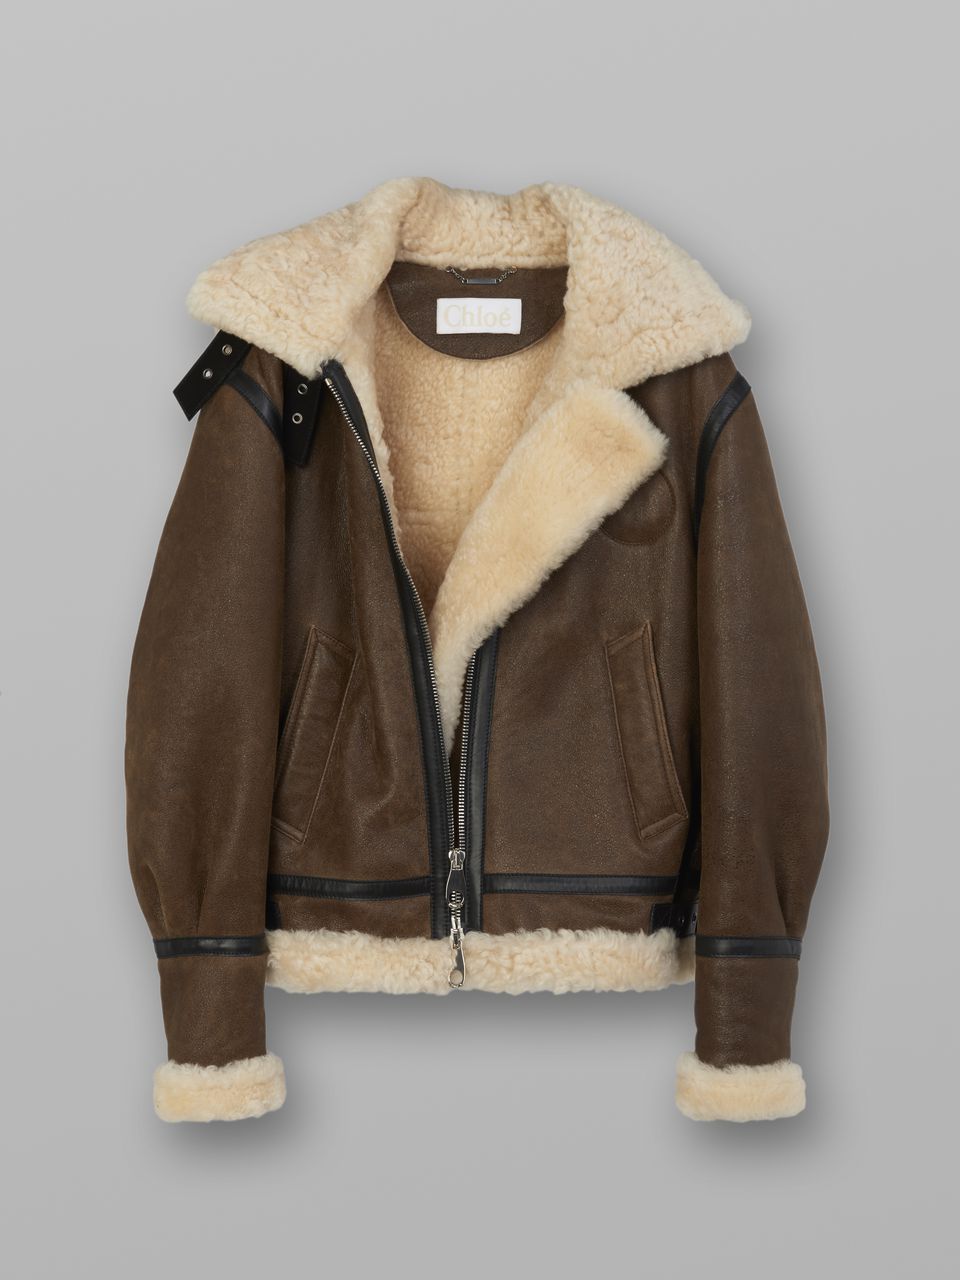 Chloe Aviator Jacket Winter Coats: Fashion Forward Options You'll Love